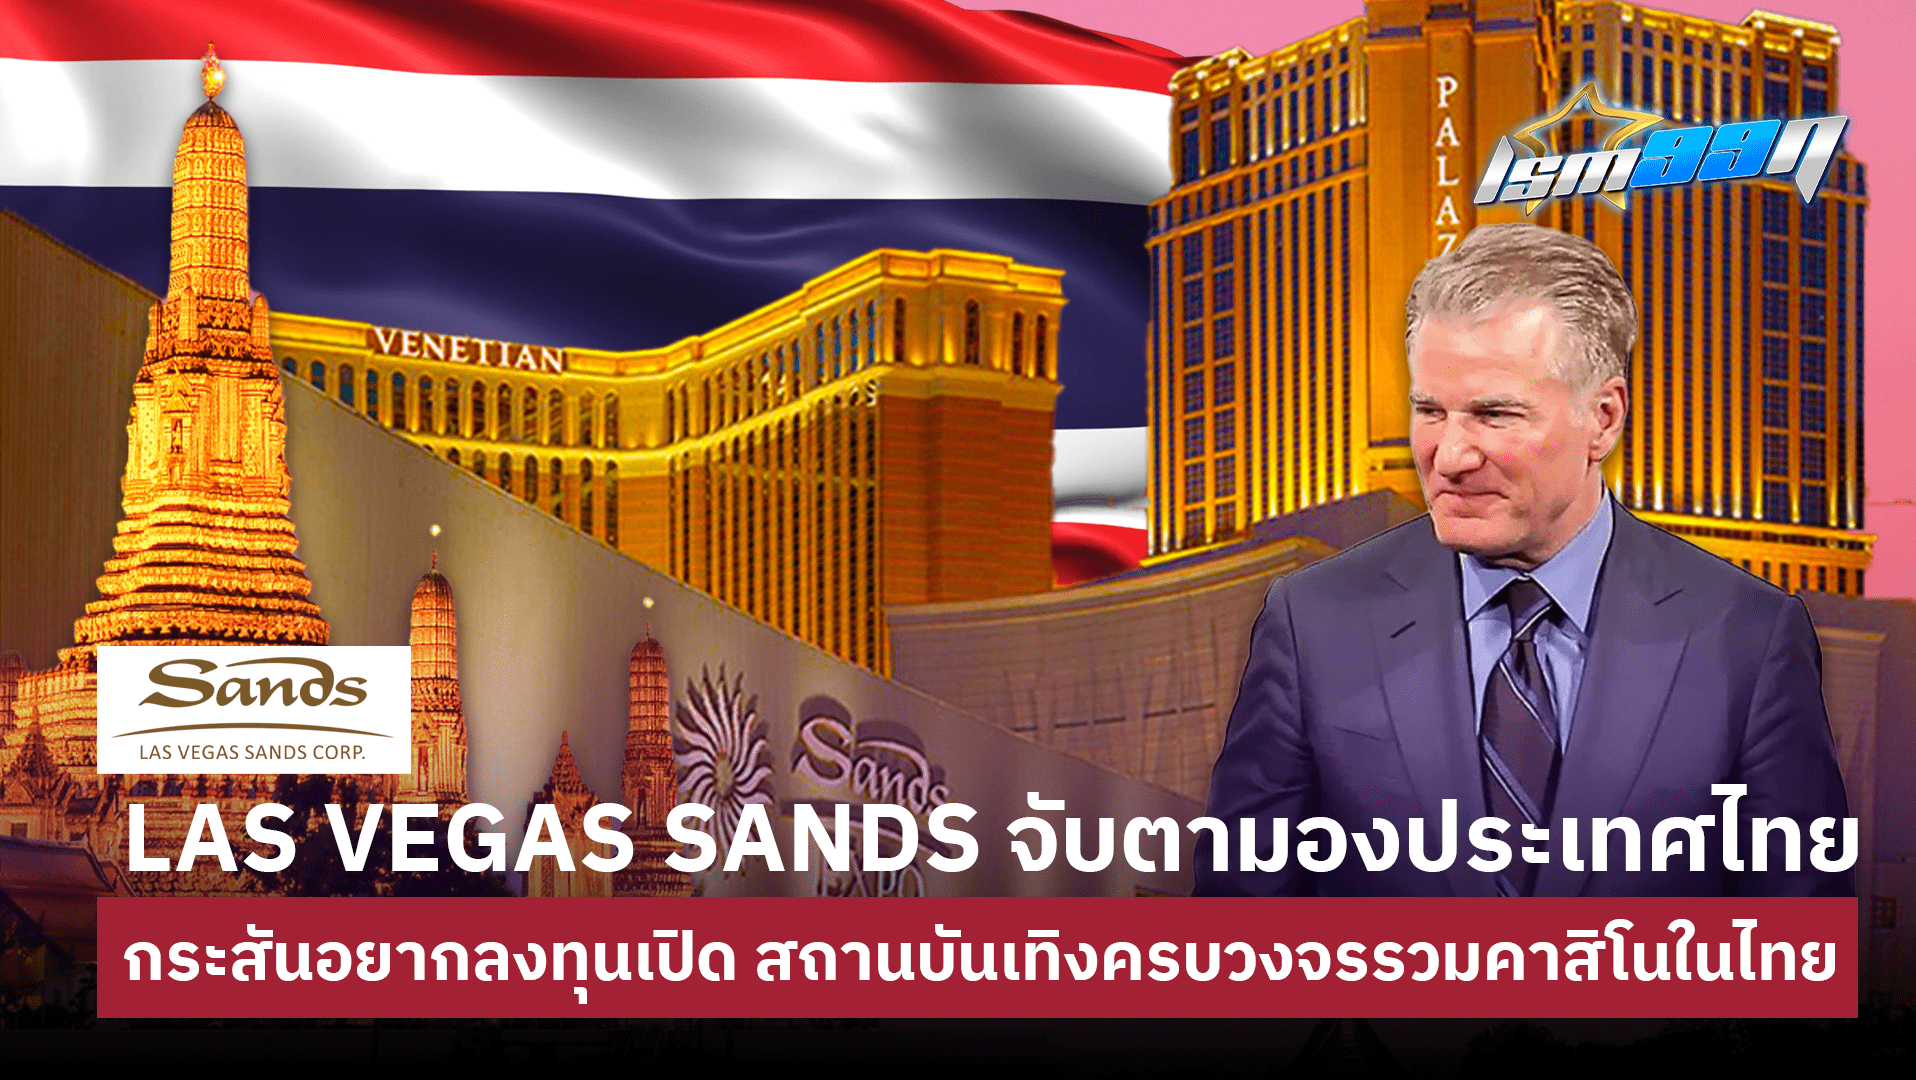 Las Vegas Sands บริษัทธุรกิจคาสิโนที่ใหญ่ที่สุดในโลก สนใจมาลงทุนที่ไทย